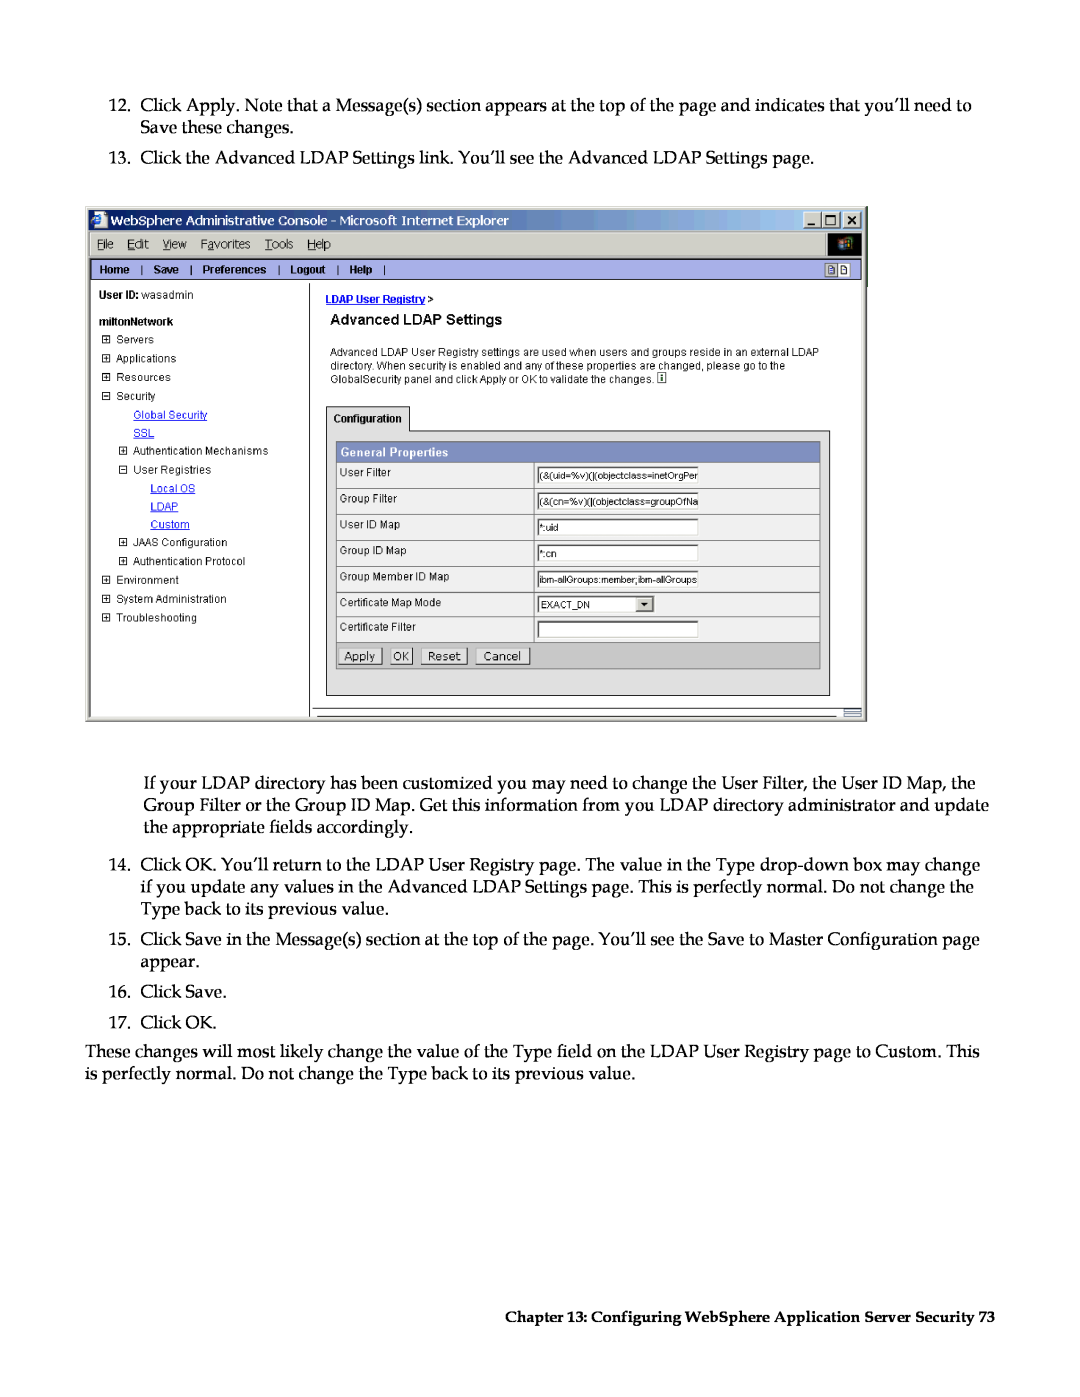 IBM G210-1784-00 manual Click Save 17. Click OK 